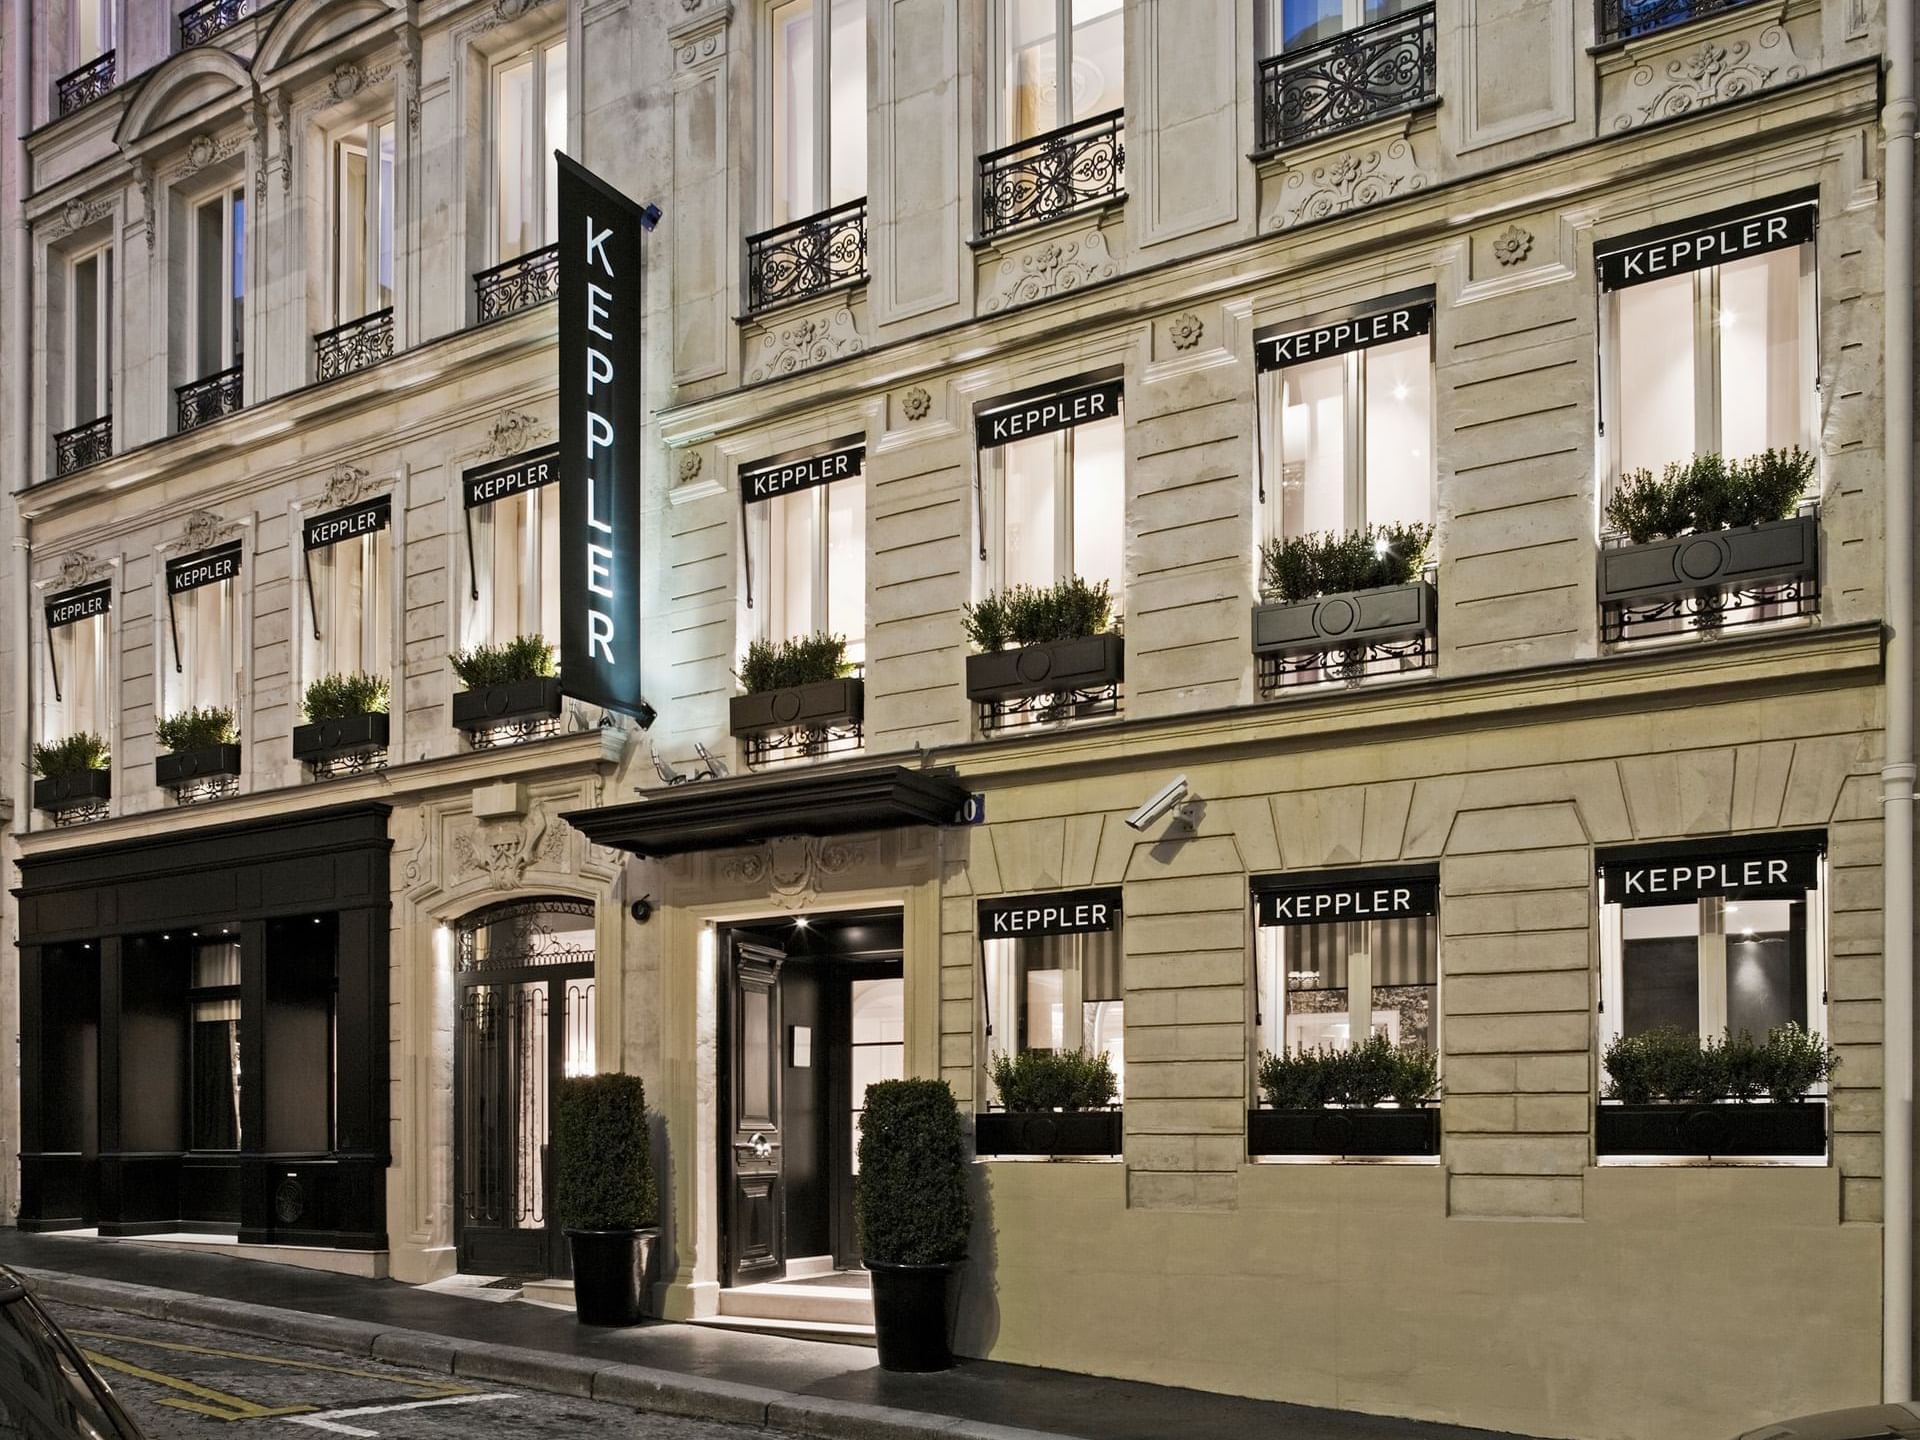 External view of the Hotel Keppler Paris.